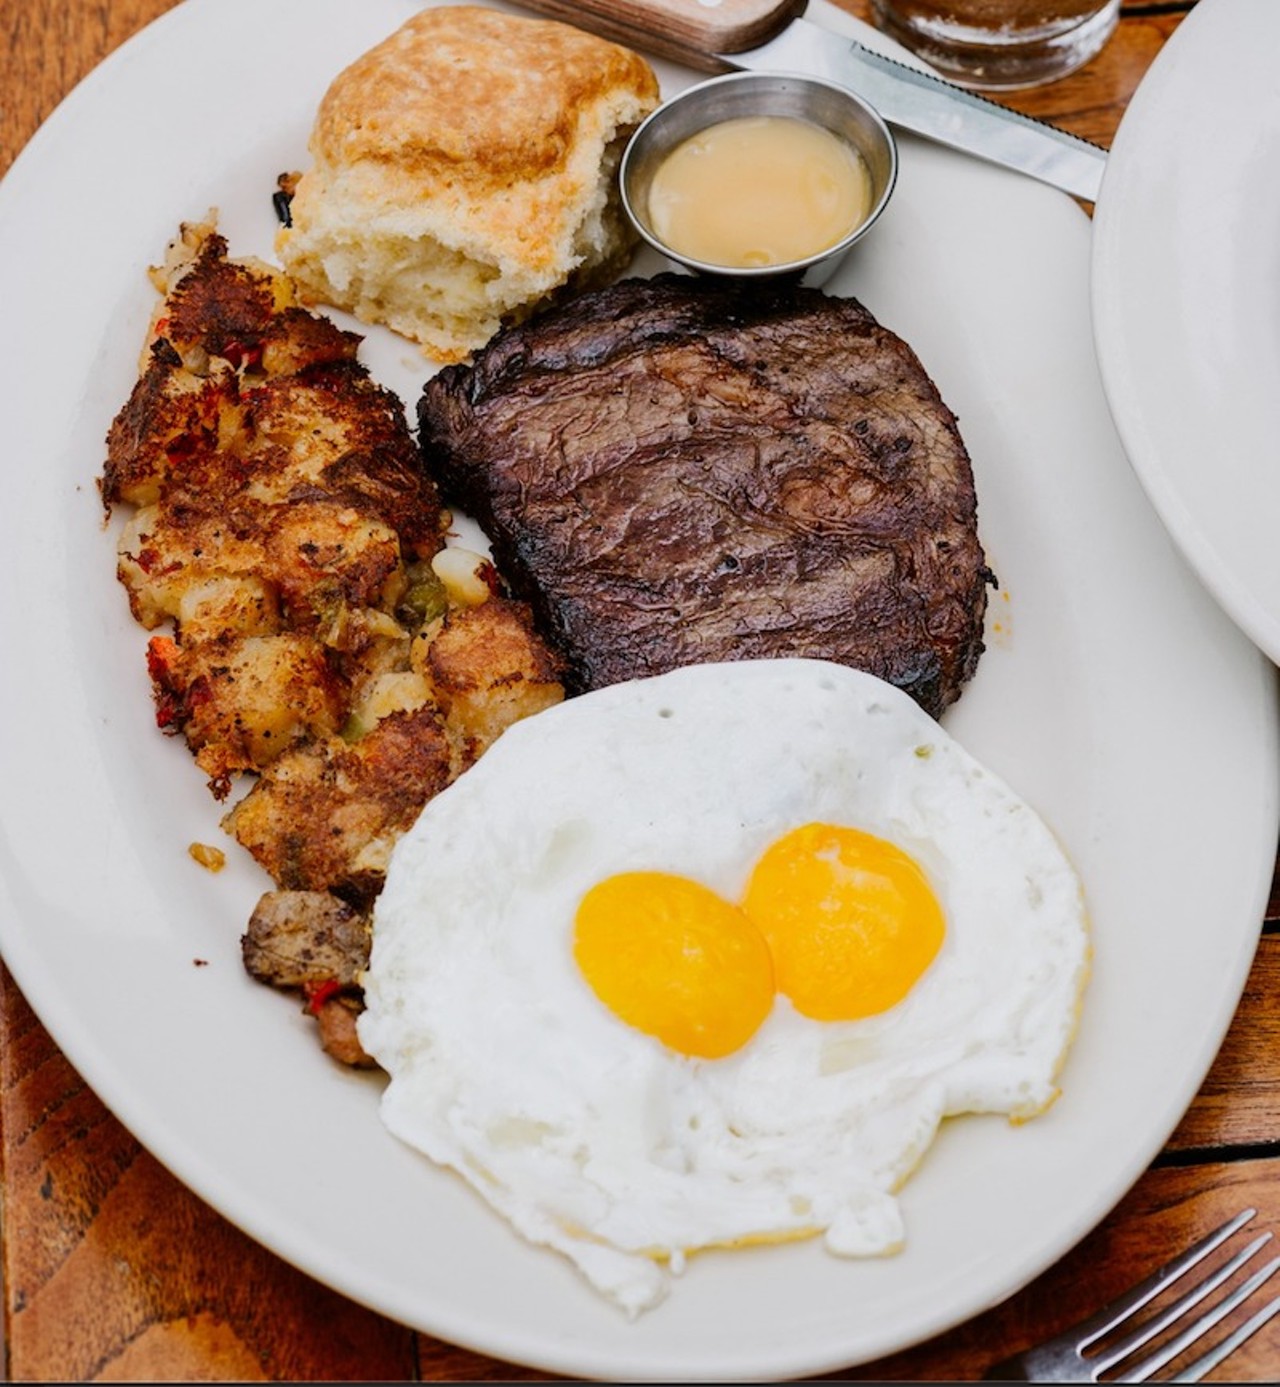 Best Breakfast/Brunch (Washtenaw) 
Zingerman’s Roadhouse
2501 Jackson Ave., Ann Arbor; 734-663-3663; zingermansroadhouse.com